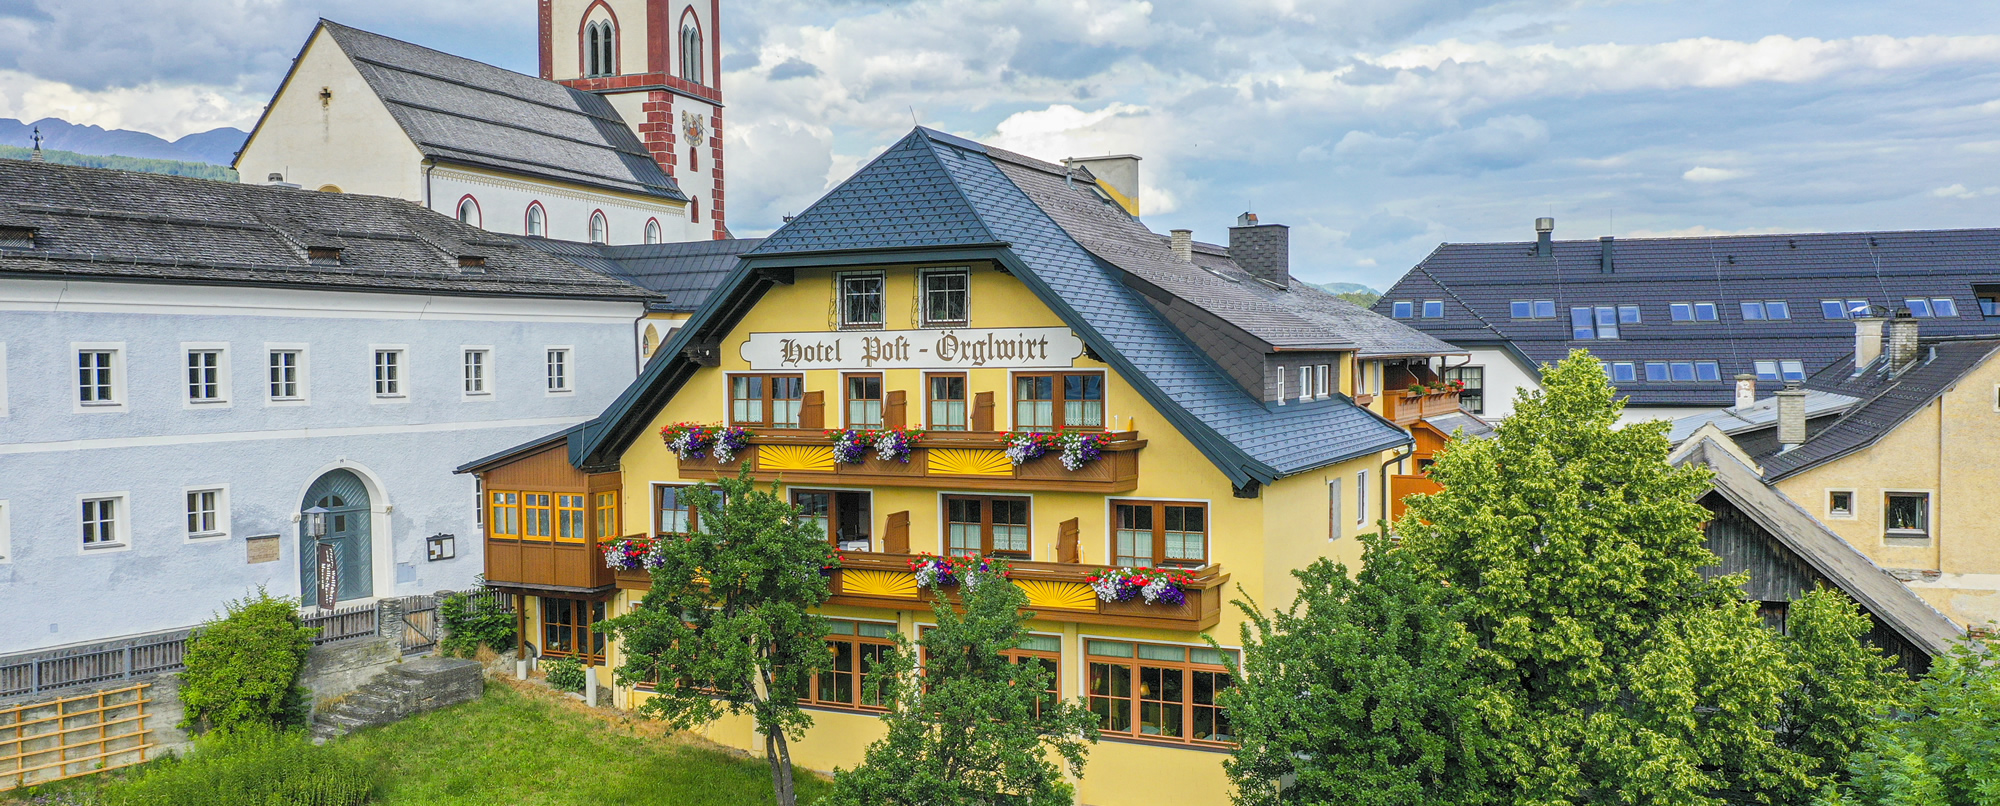 Hotel Post Örglwirt in Mariapfarr, Salzburger Land